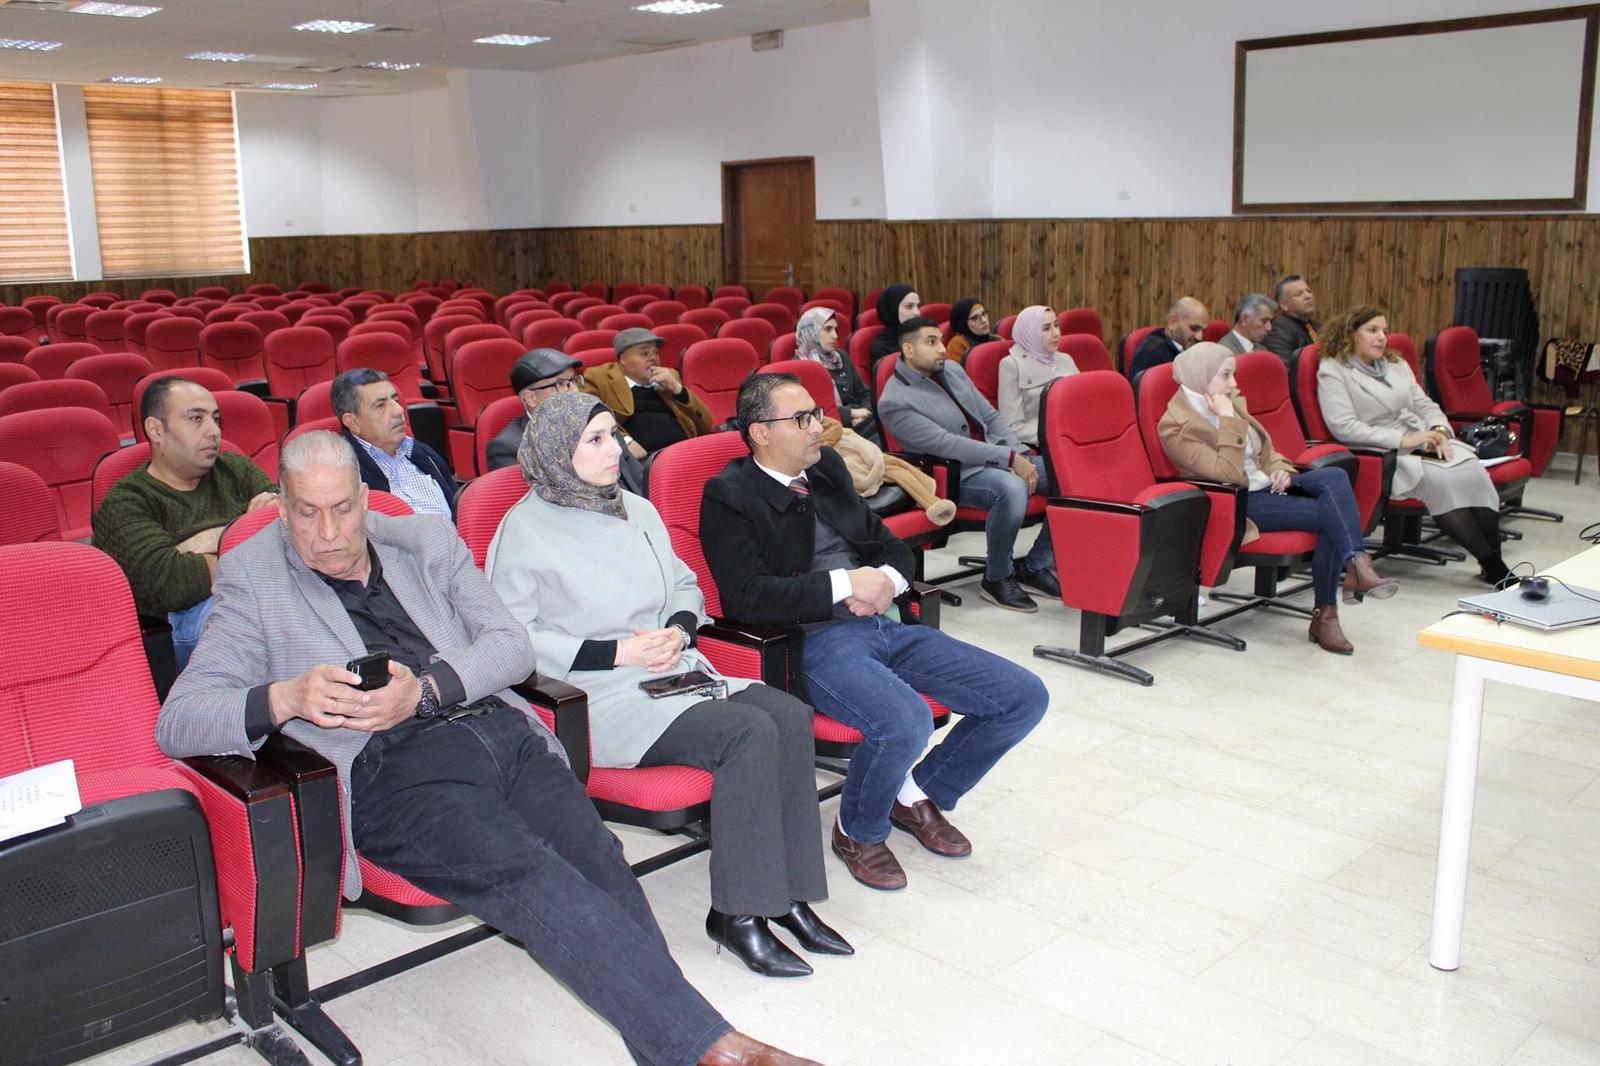 the audience workshop for presentation 